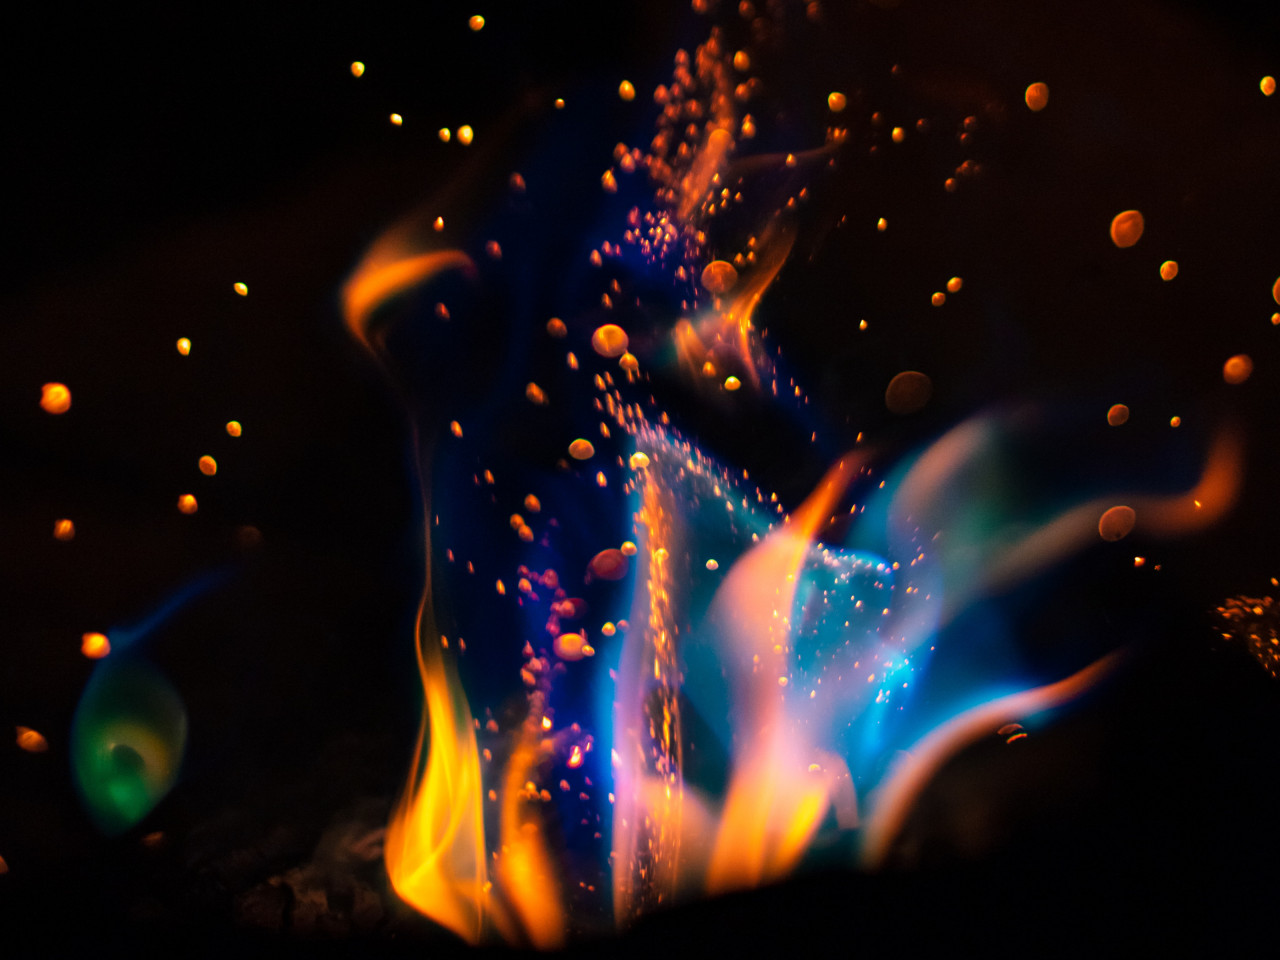 Hot flames in darkness wallpaper 1280x960